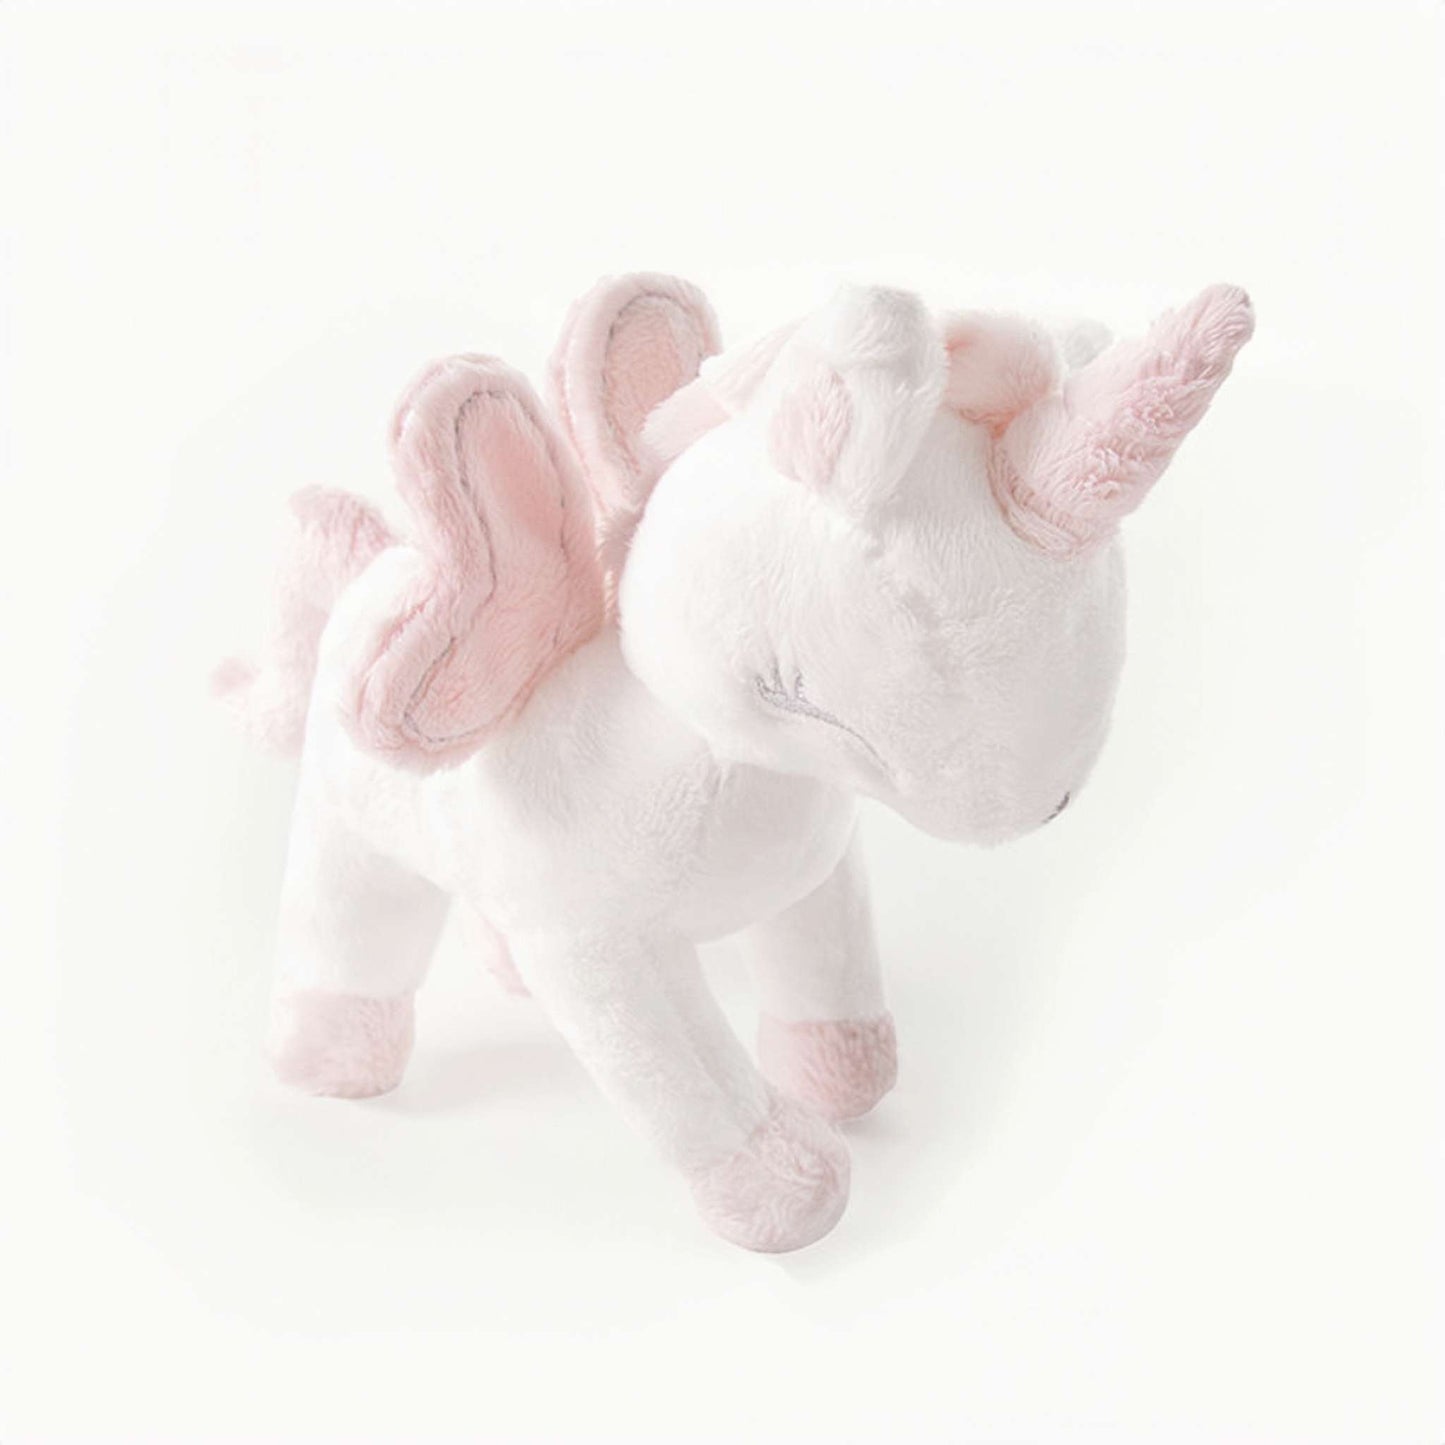 a unicorn plush toy